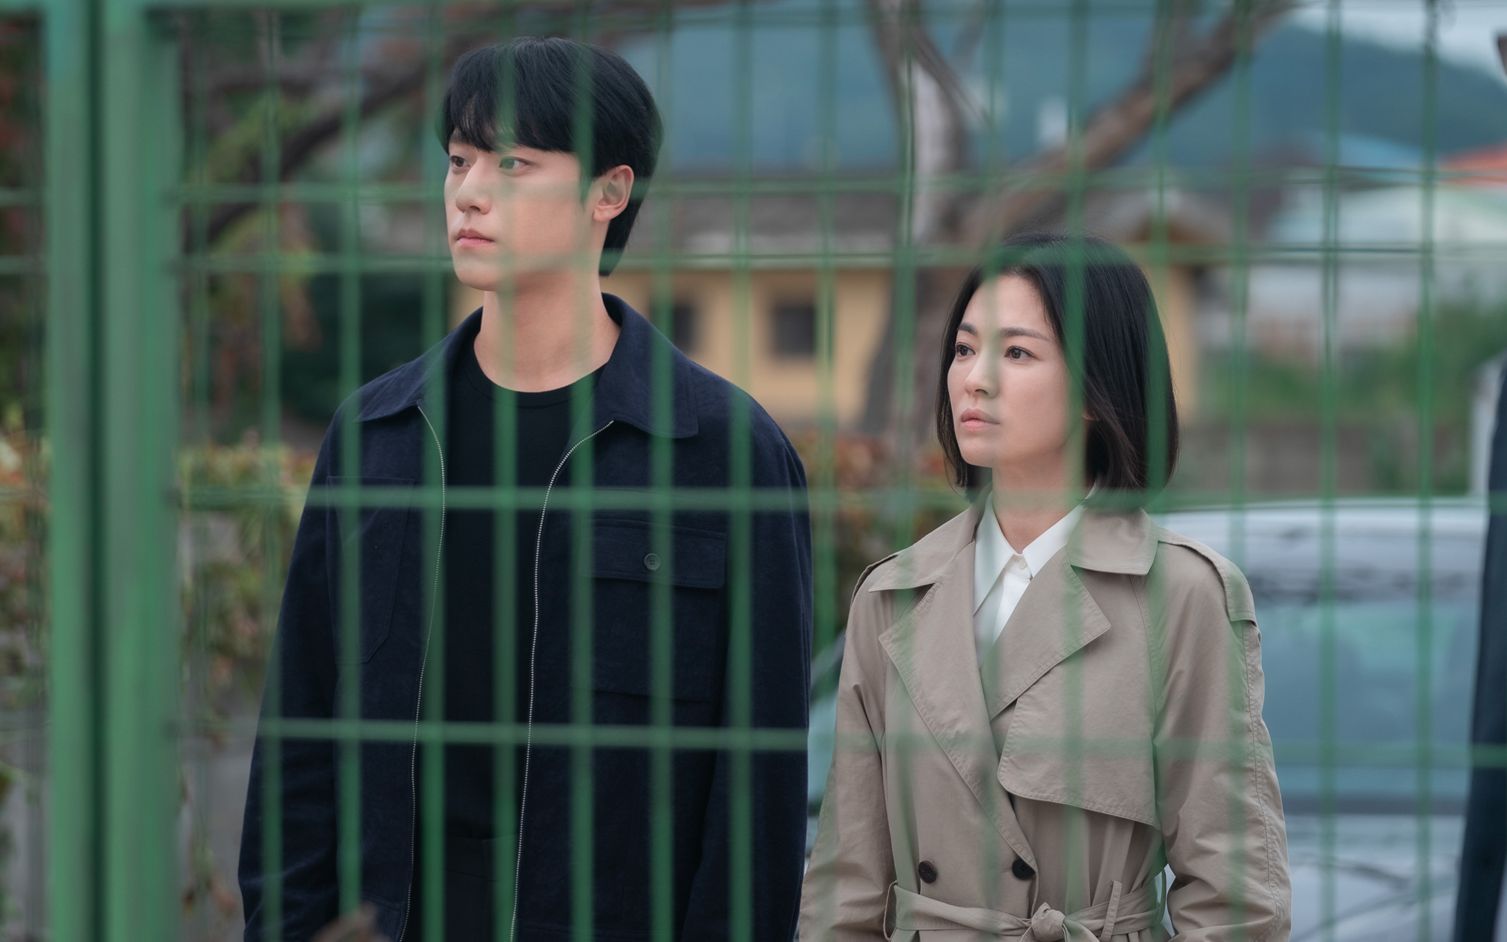 Lengkap dengan sinopsis hingga profil pemain seperti Song Hye Kyo, Lee Do Hyun, dan Im Ji Yeon, berikut link nonton drama Korea The Glory Season 2 sub Indo yang selesaikan akhir kisah Dong Eun dan Yeon Jin.